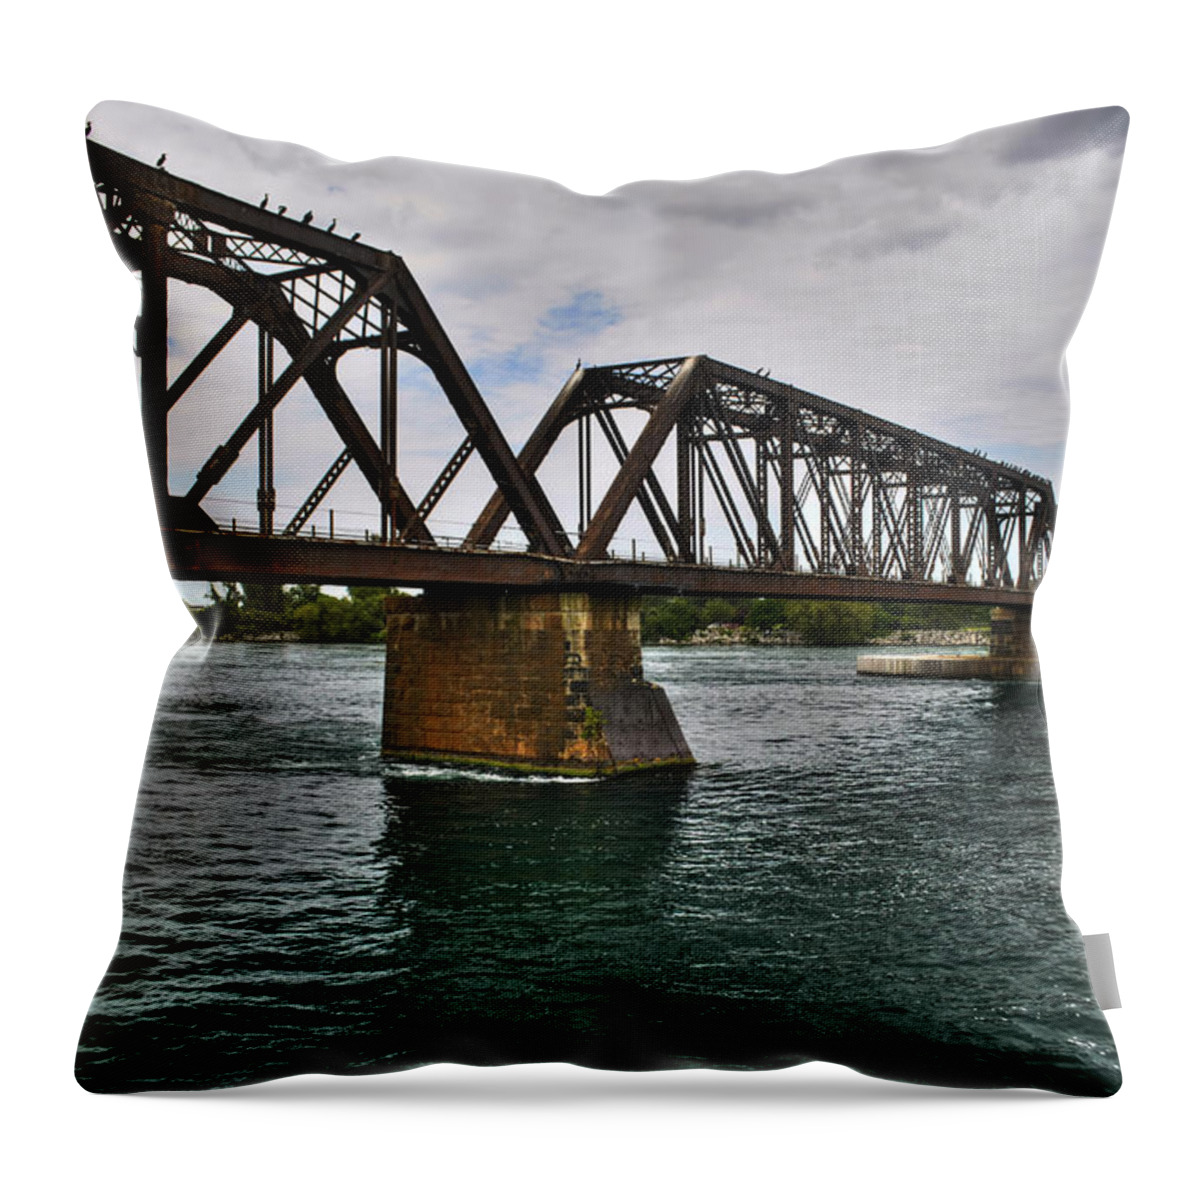 Buffalo Throw Pillow featuring the photograph 001 The International Railway Bridge by Michael Frank Jr